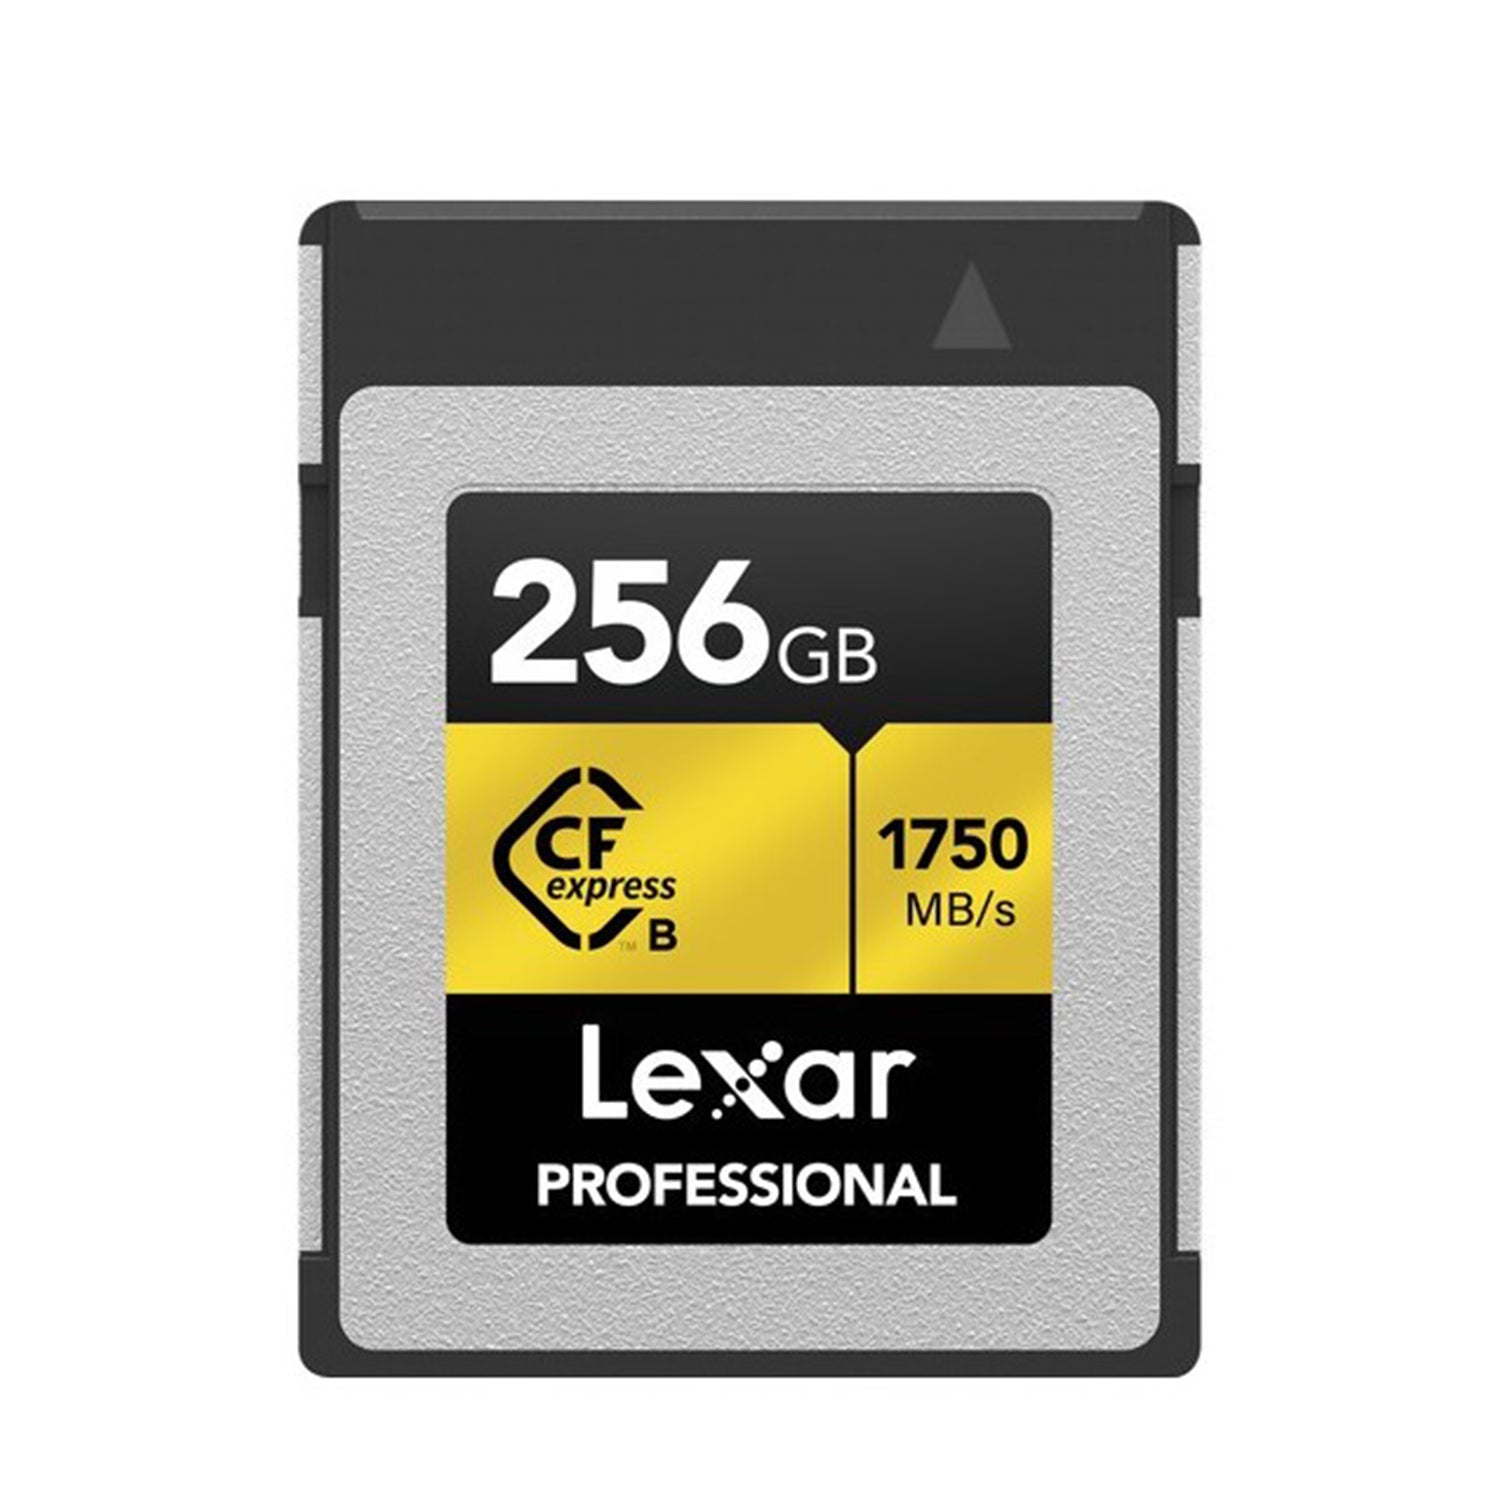 Lexar CFEXPRESS type-B 256GB Gold Hispeed - Cine Sud è da 48 anni sul mercato! 933033